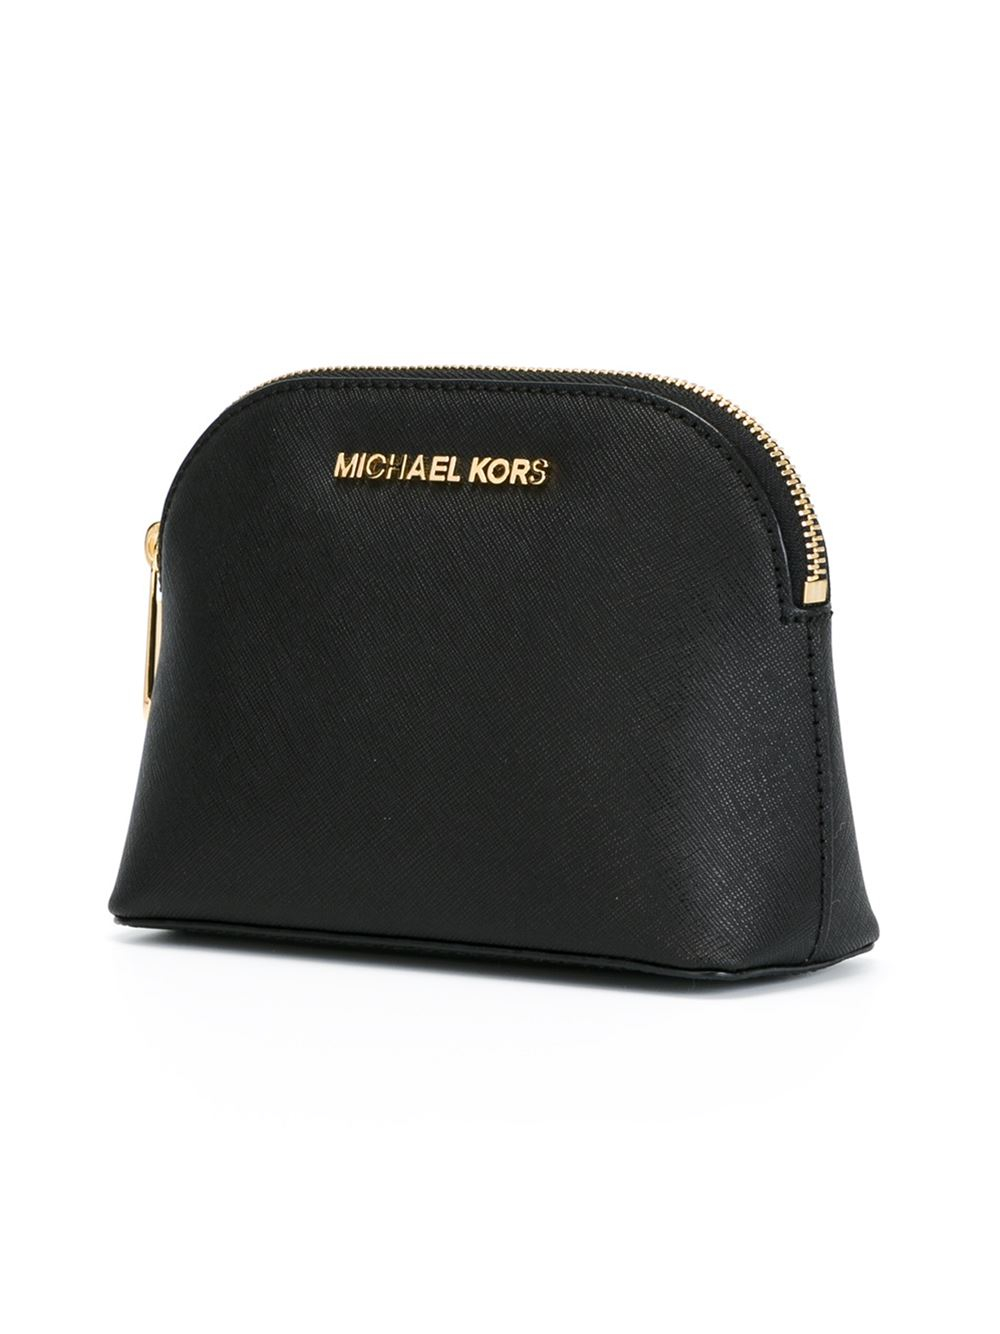 MICHAEL Michael Kors Cindy Makeup Bag in Black | Lyst